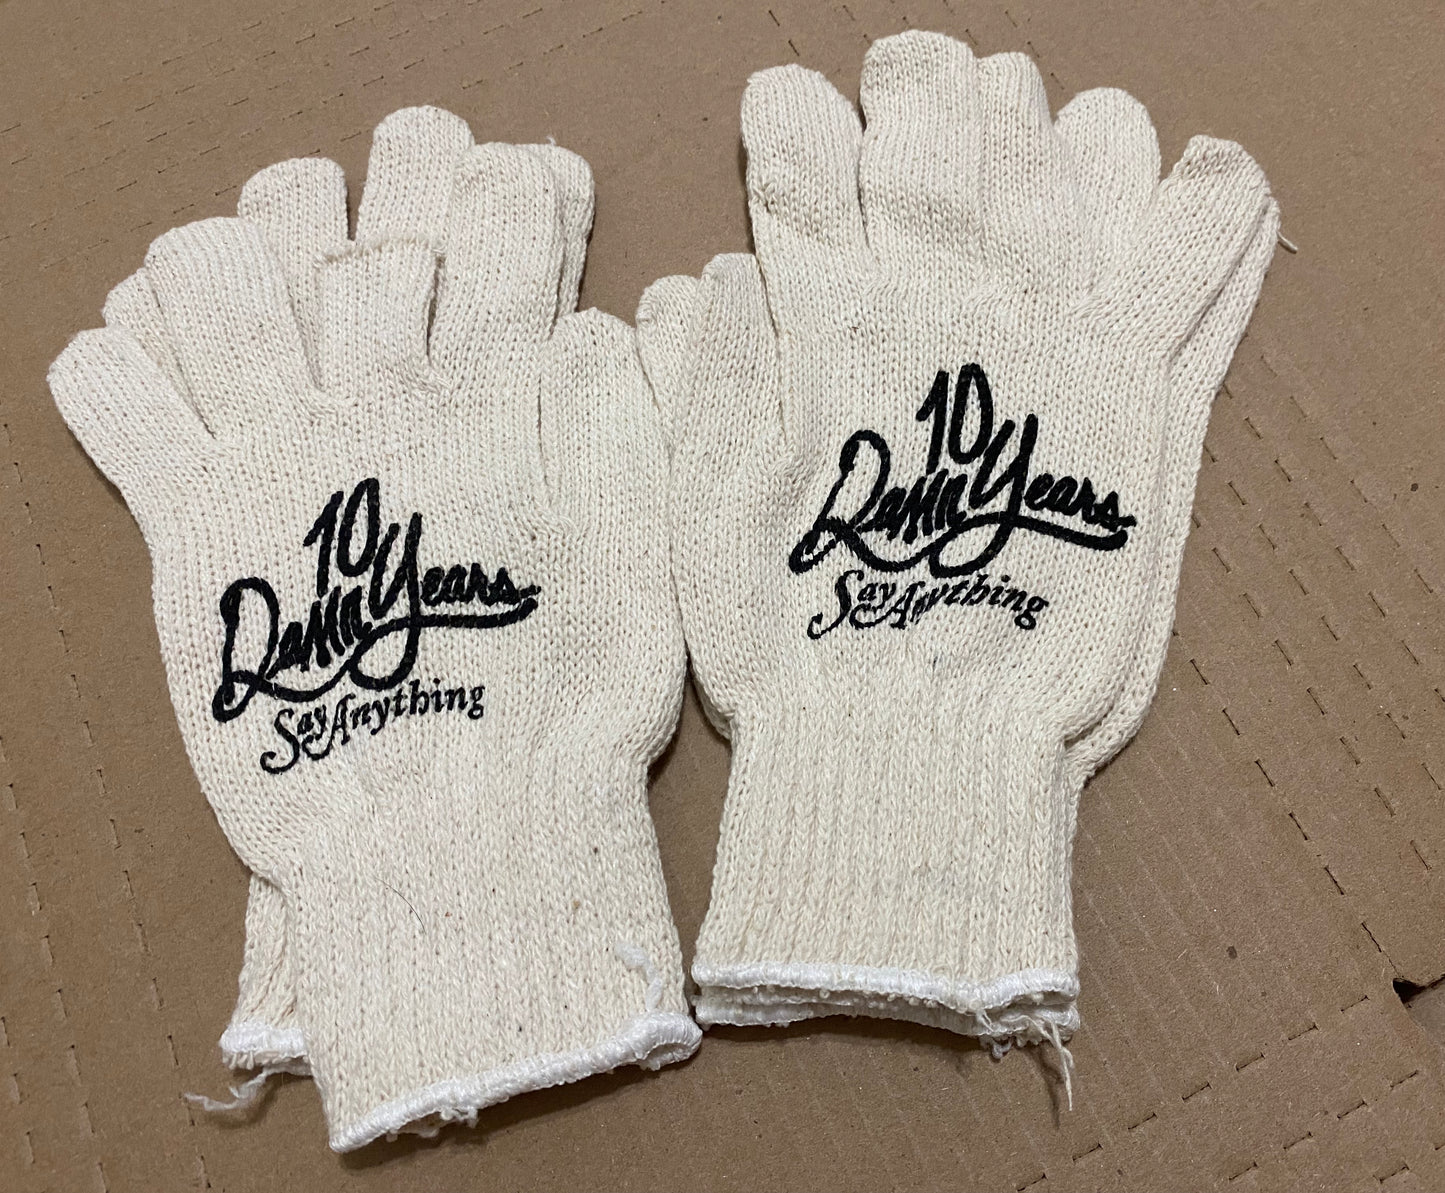 10 Damn Years Gloves